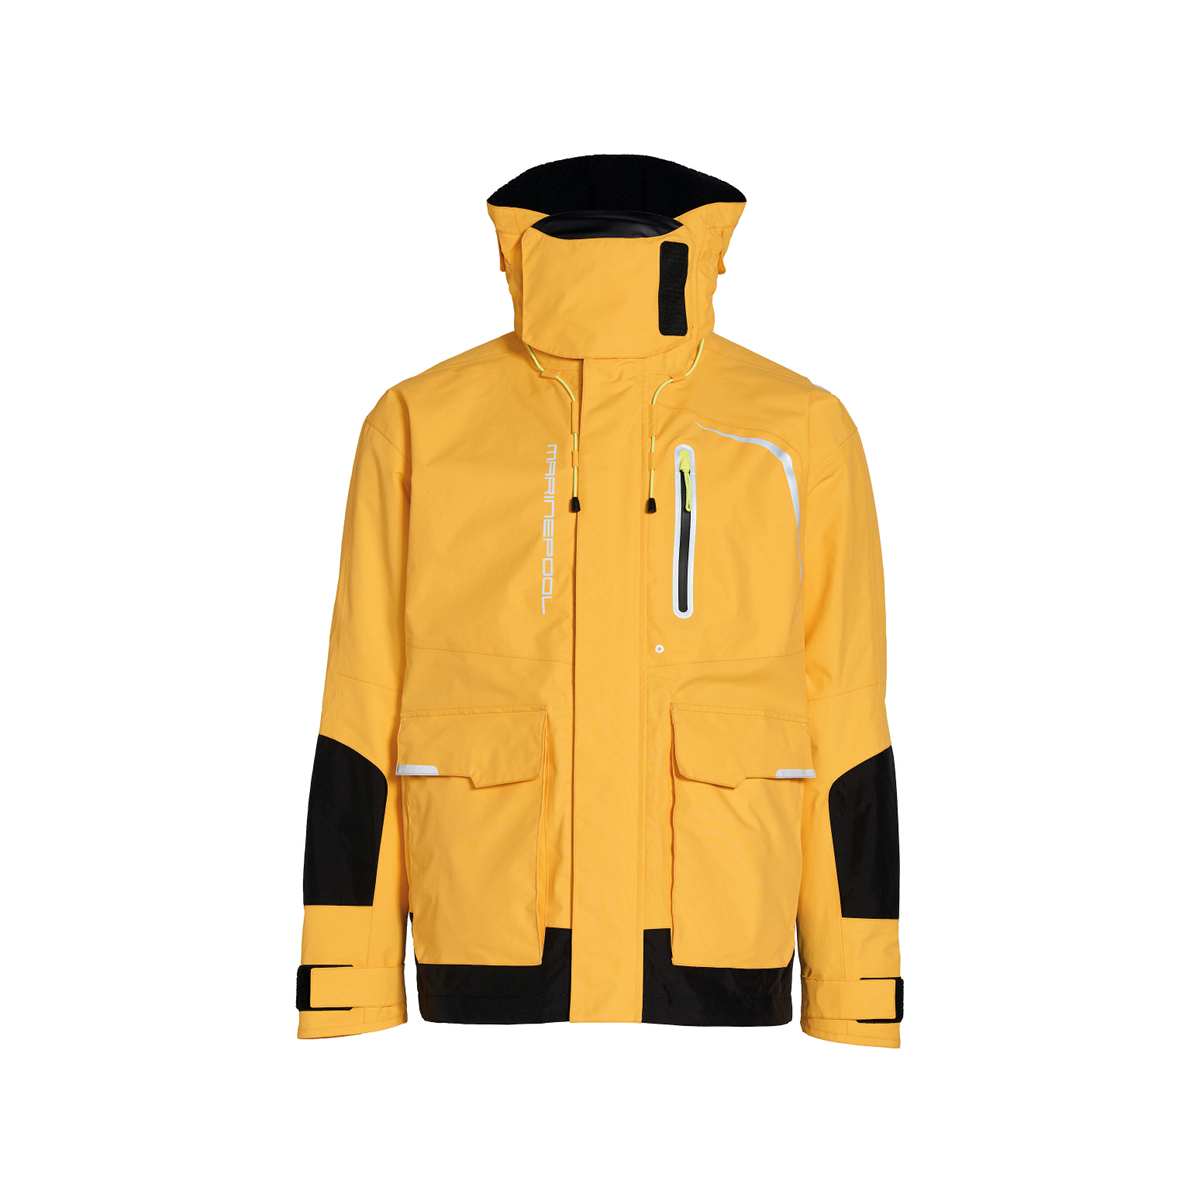 Marinepool Hobart 5 veste de voile Offshore homme jaune-noir, taille XXXL